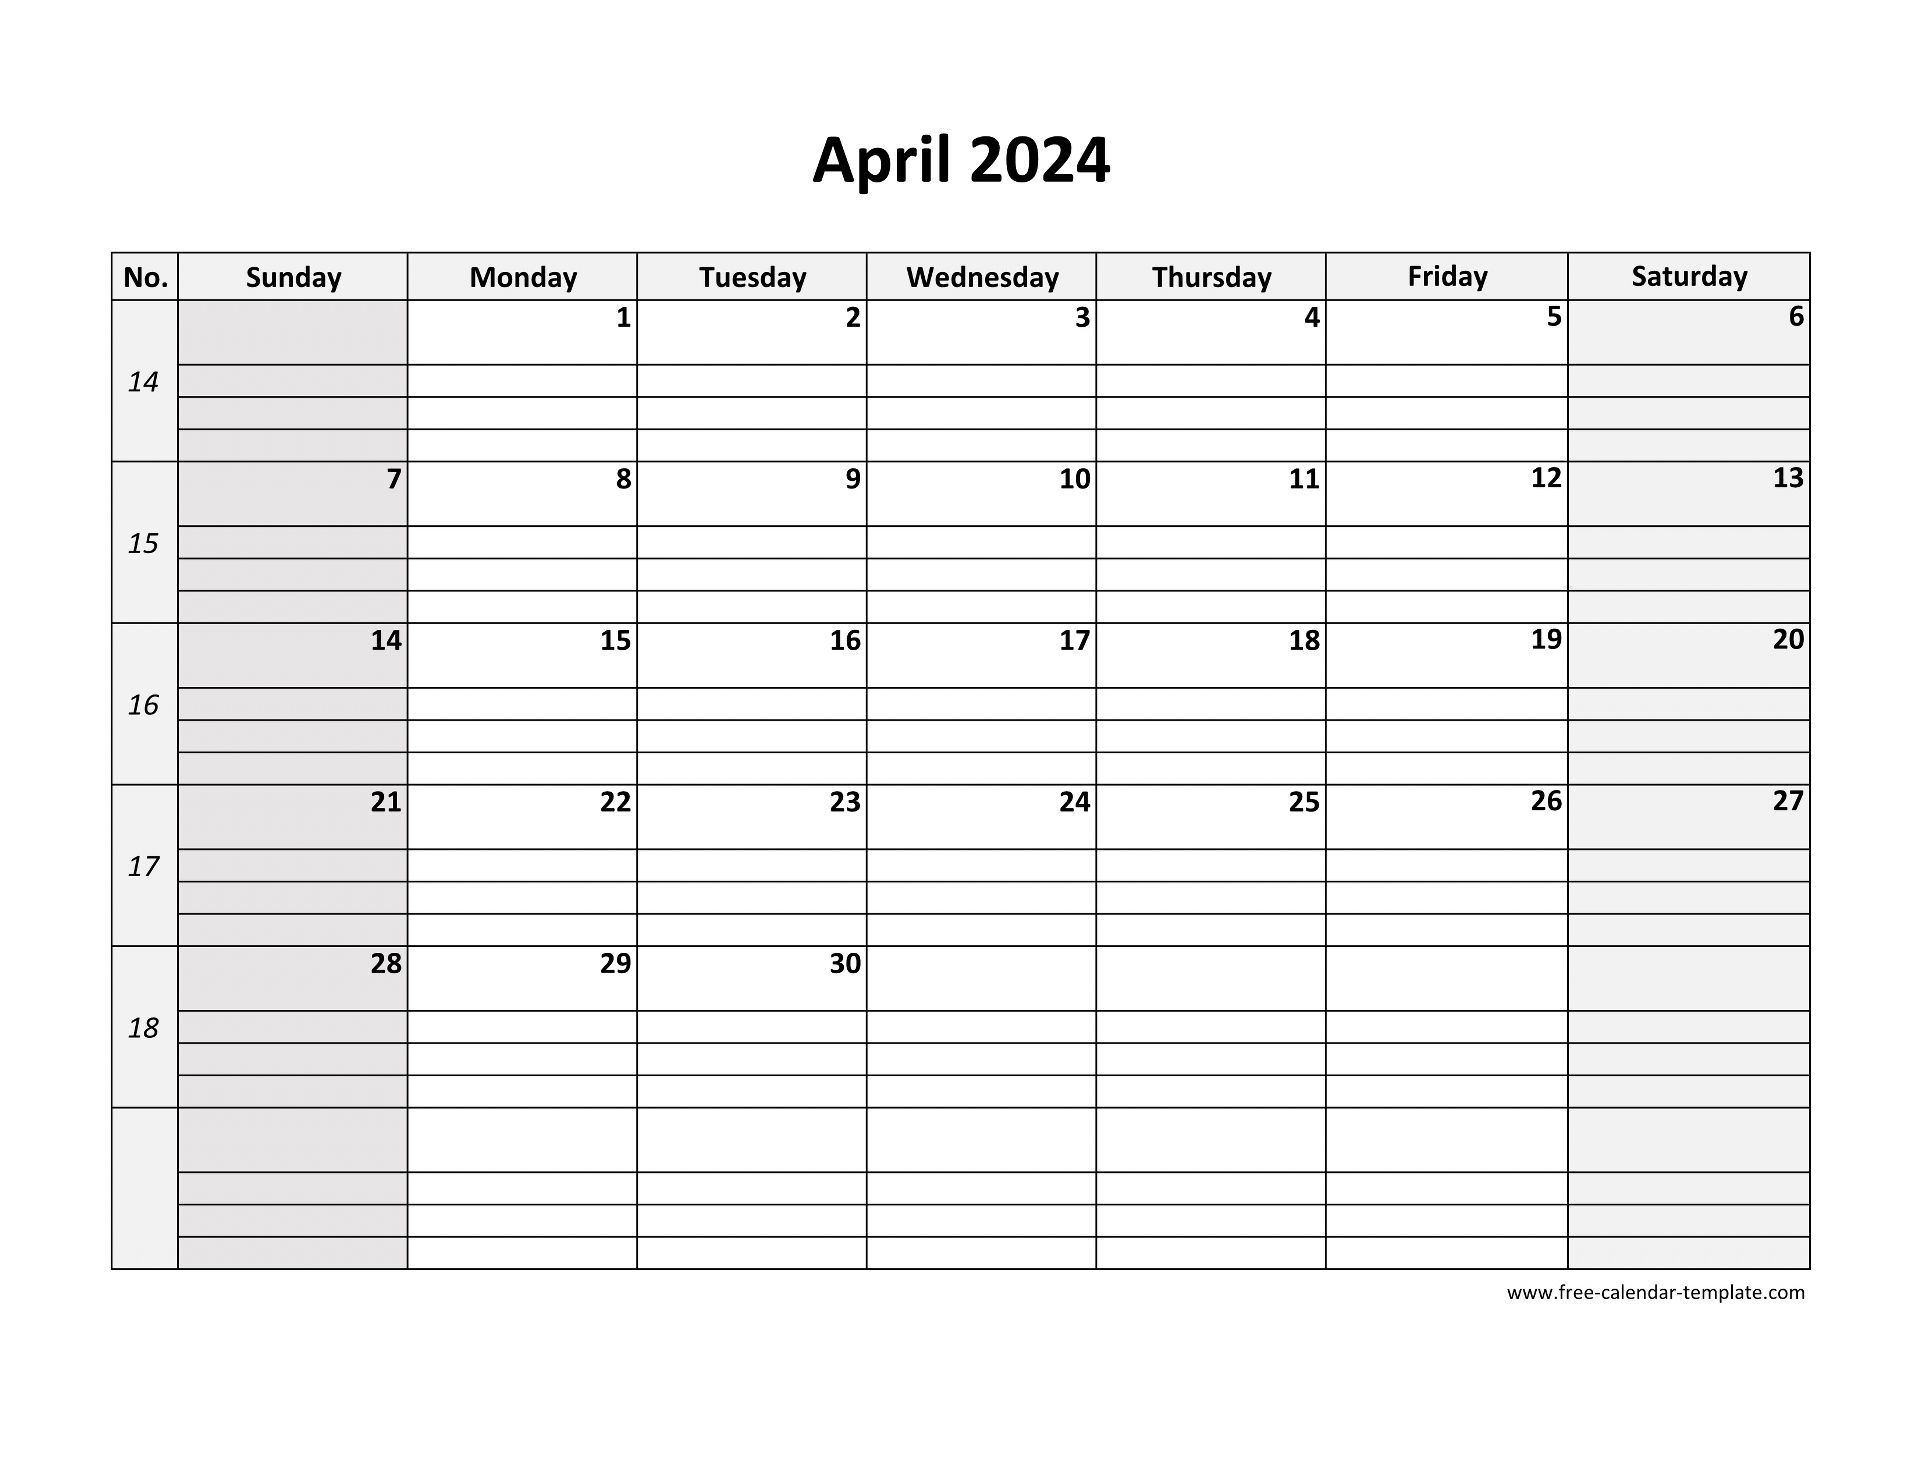 April 2024 Calendar Free Printable With Grid Lines Designed for April 2024 Calendar With Lines Printable